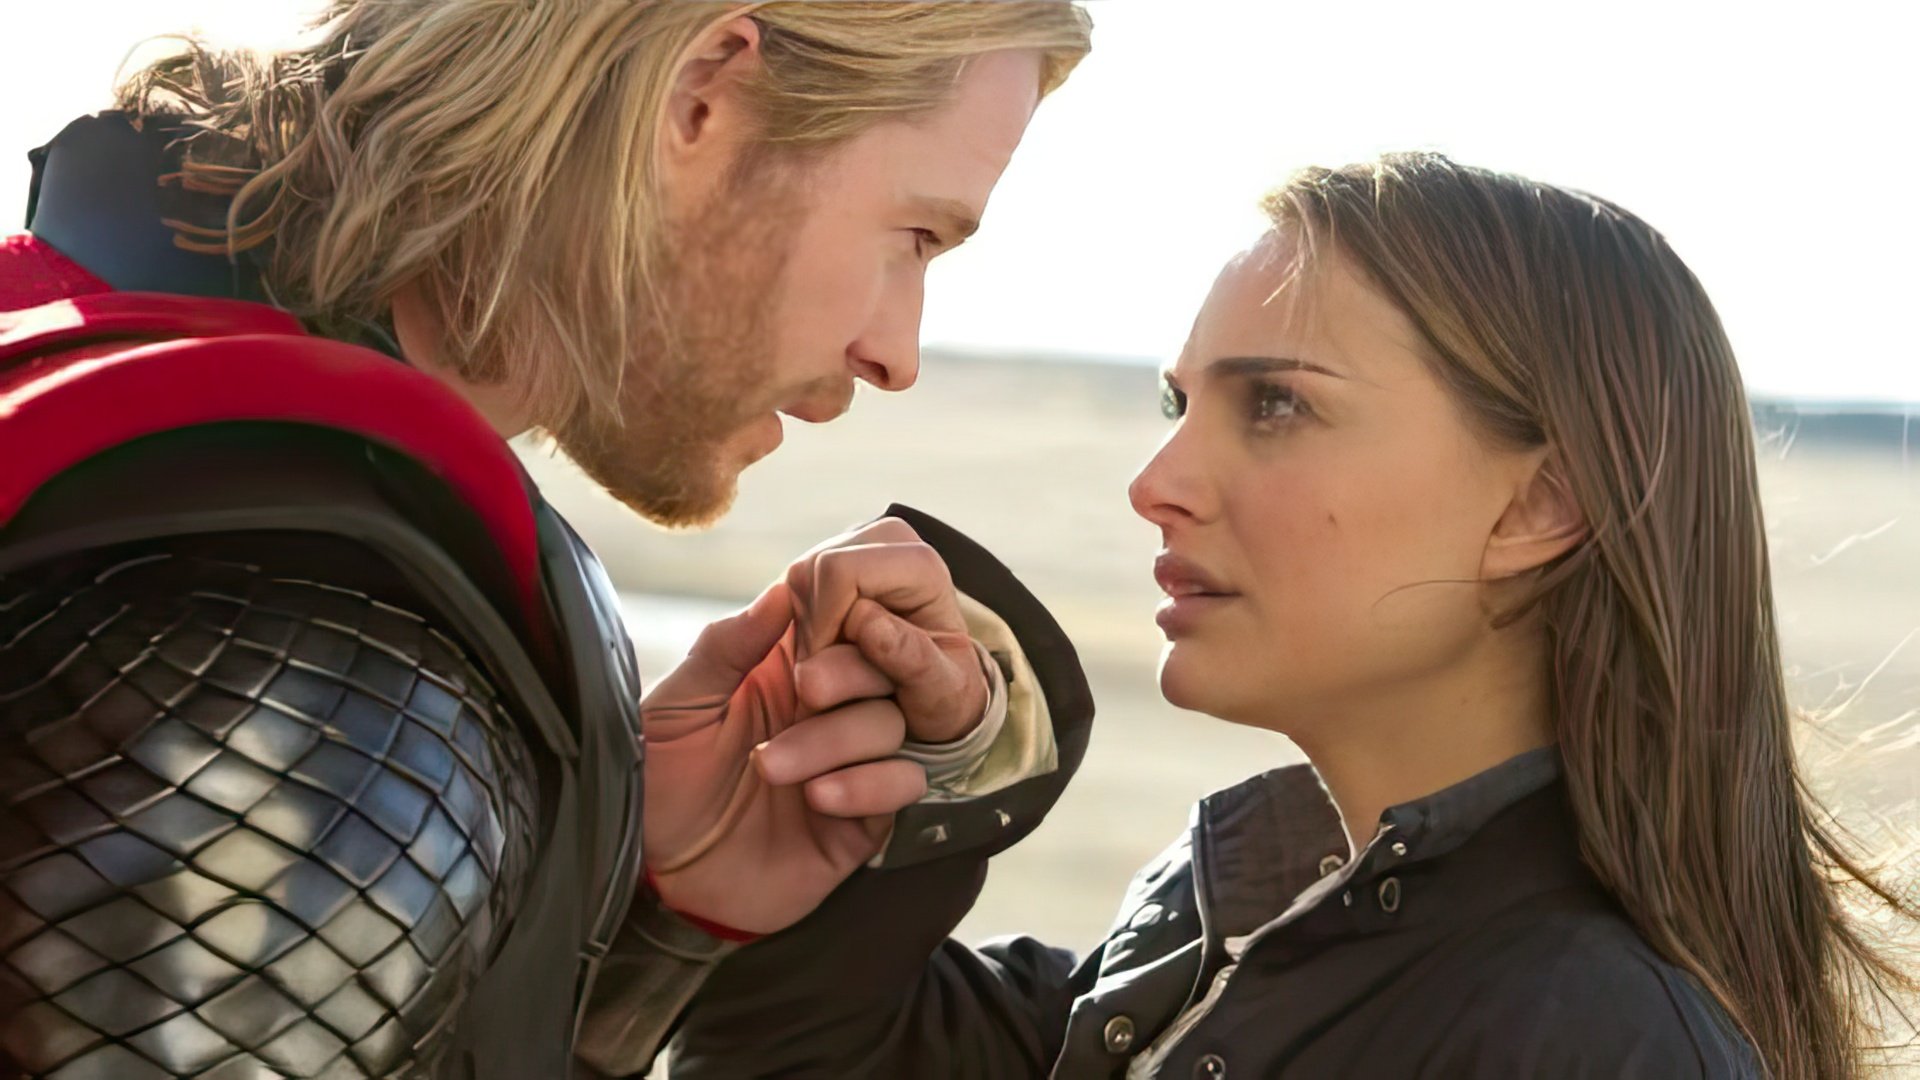 Natalie Portman and Chris Hemsworth in Thor